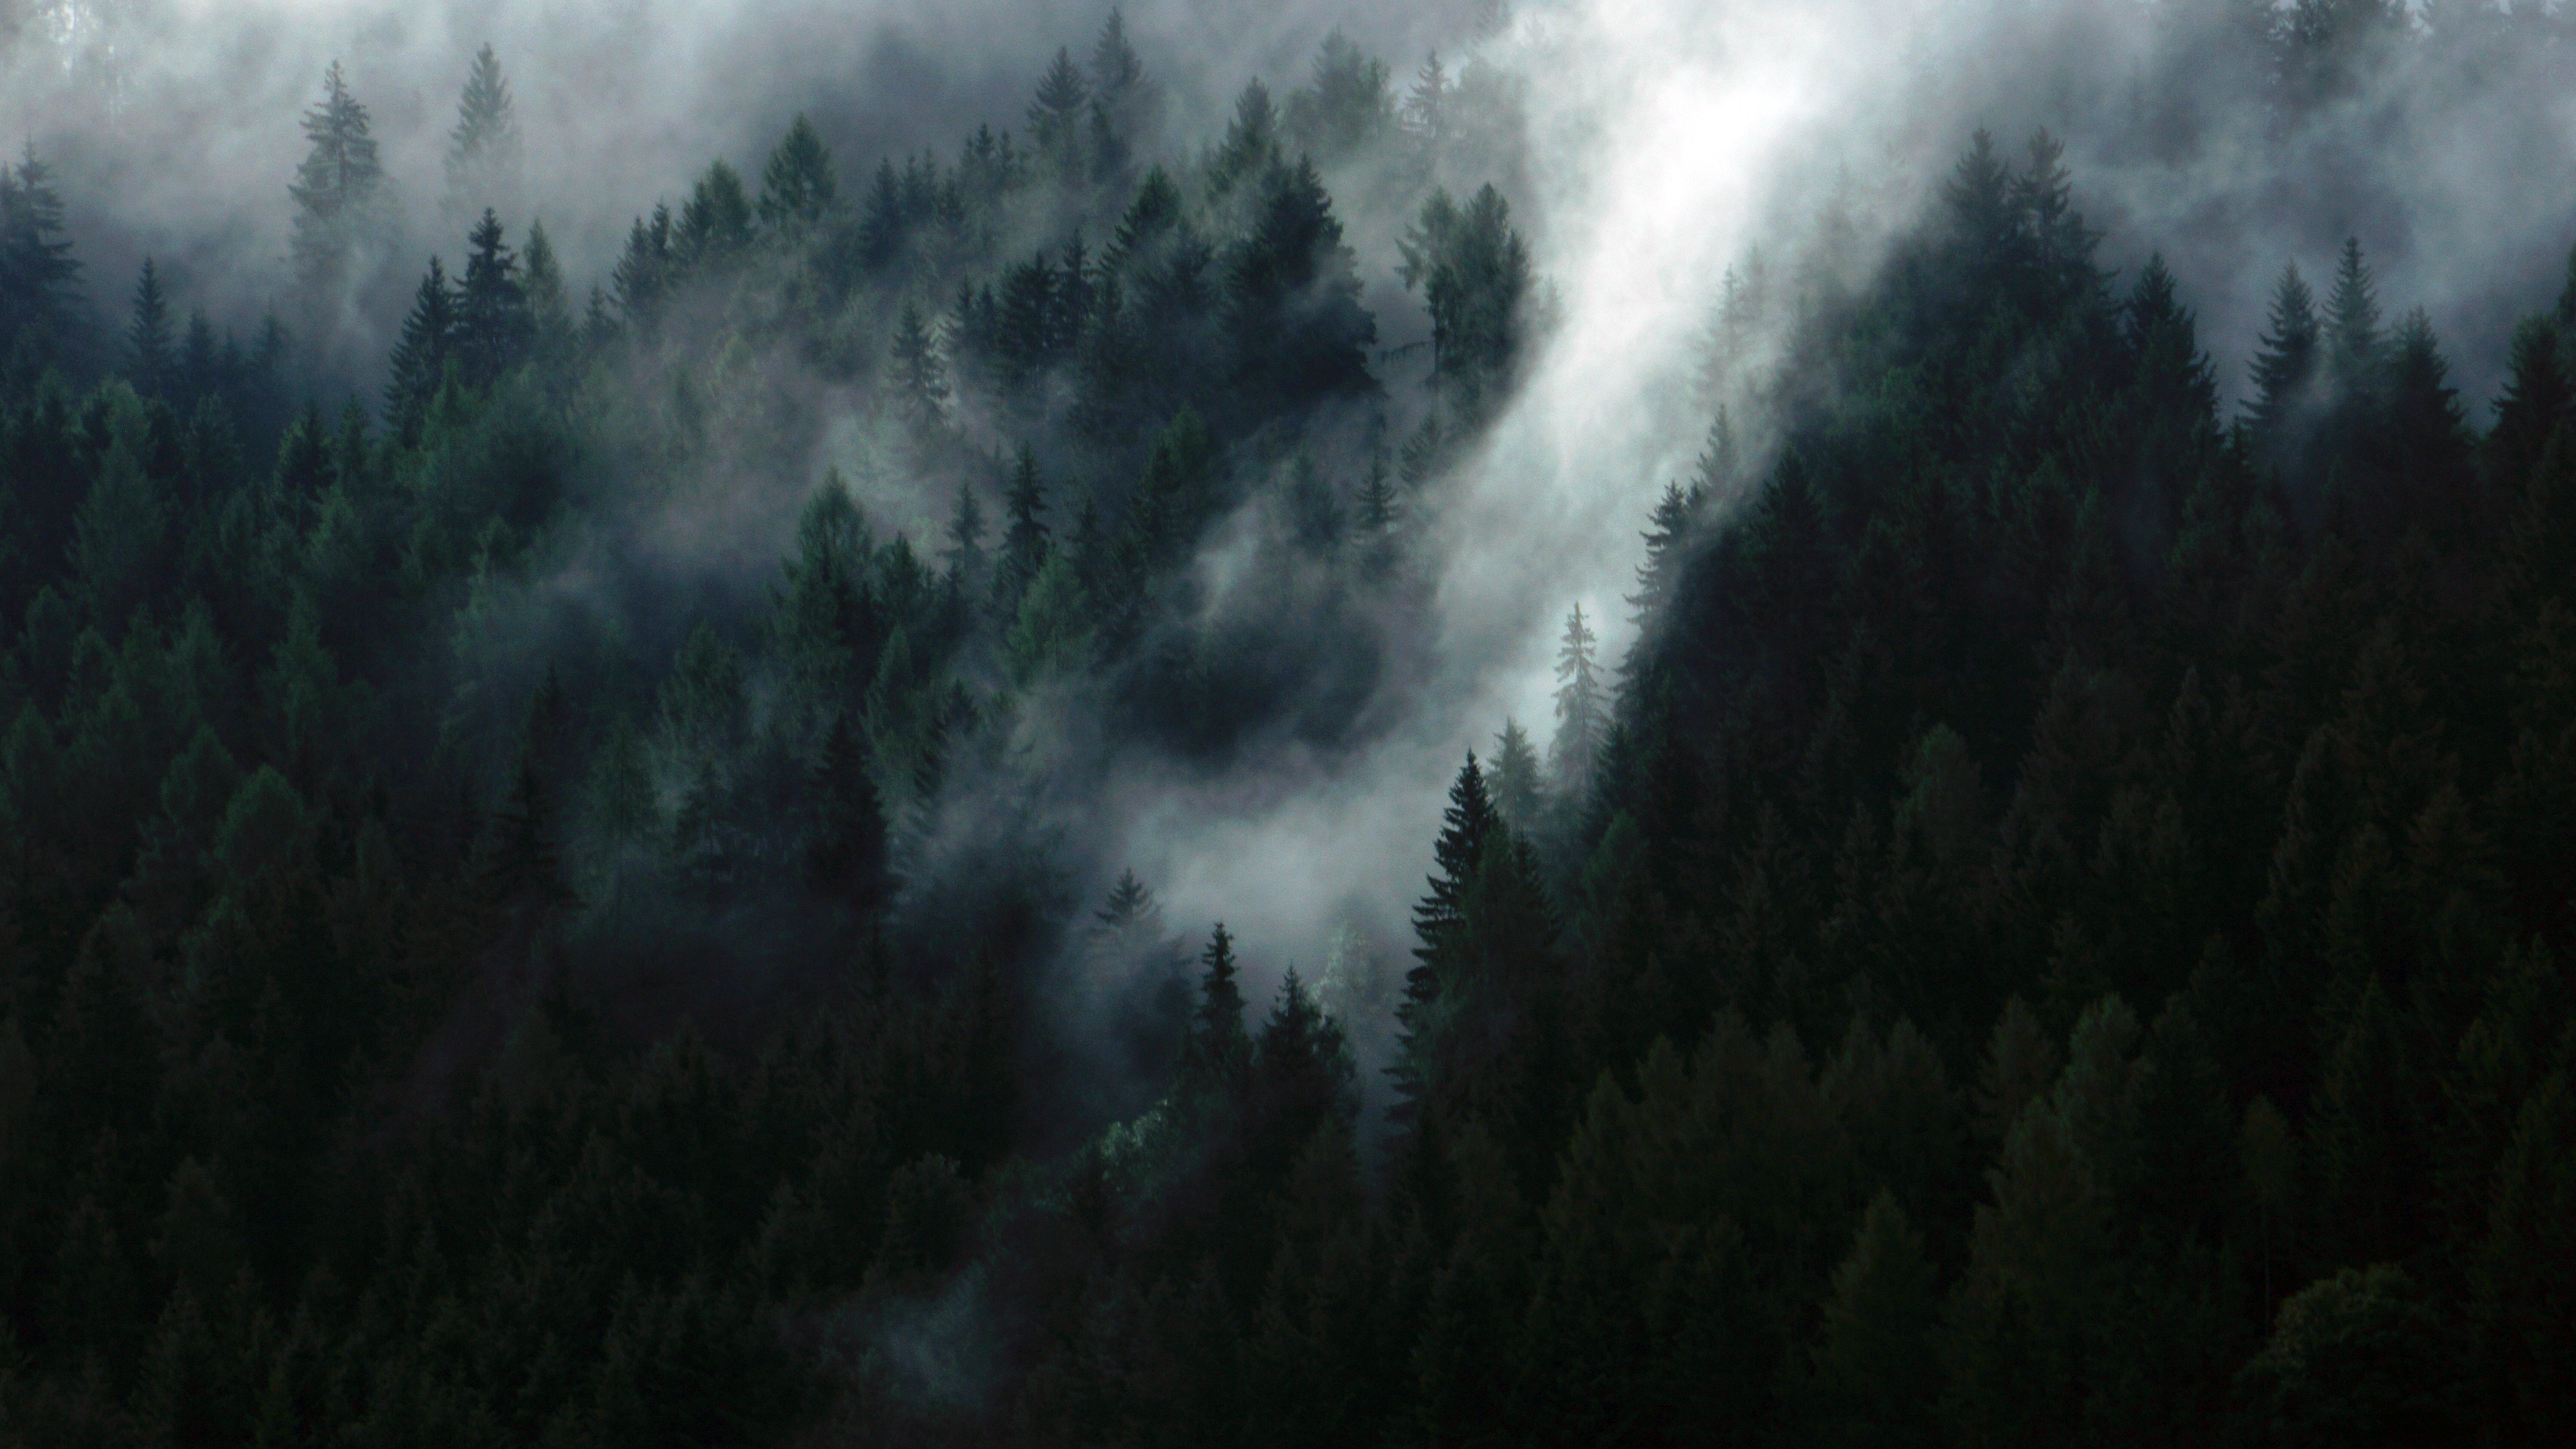 6000x3376 #PNG image, #dark, #mystical, #moody, #forest, #evergreen, #tree, #misty, #nature, #dense, #thick, #deep, #landscape, #fog, #epic, #dramatic, #mist. Mocah.org HD Desktop Wallpaper